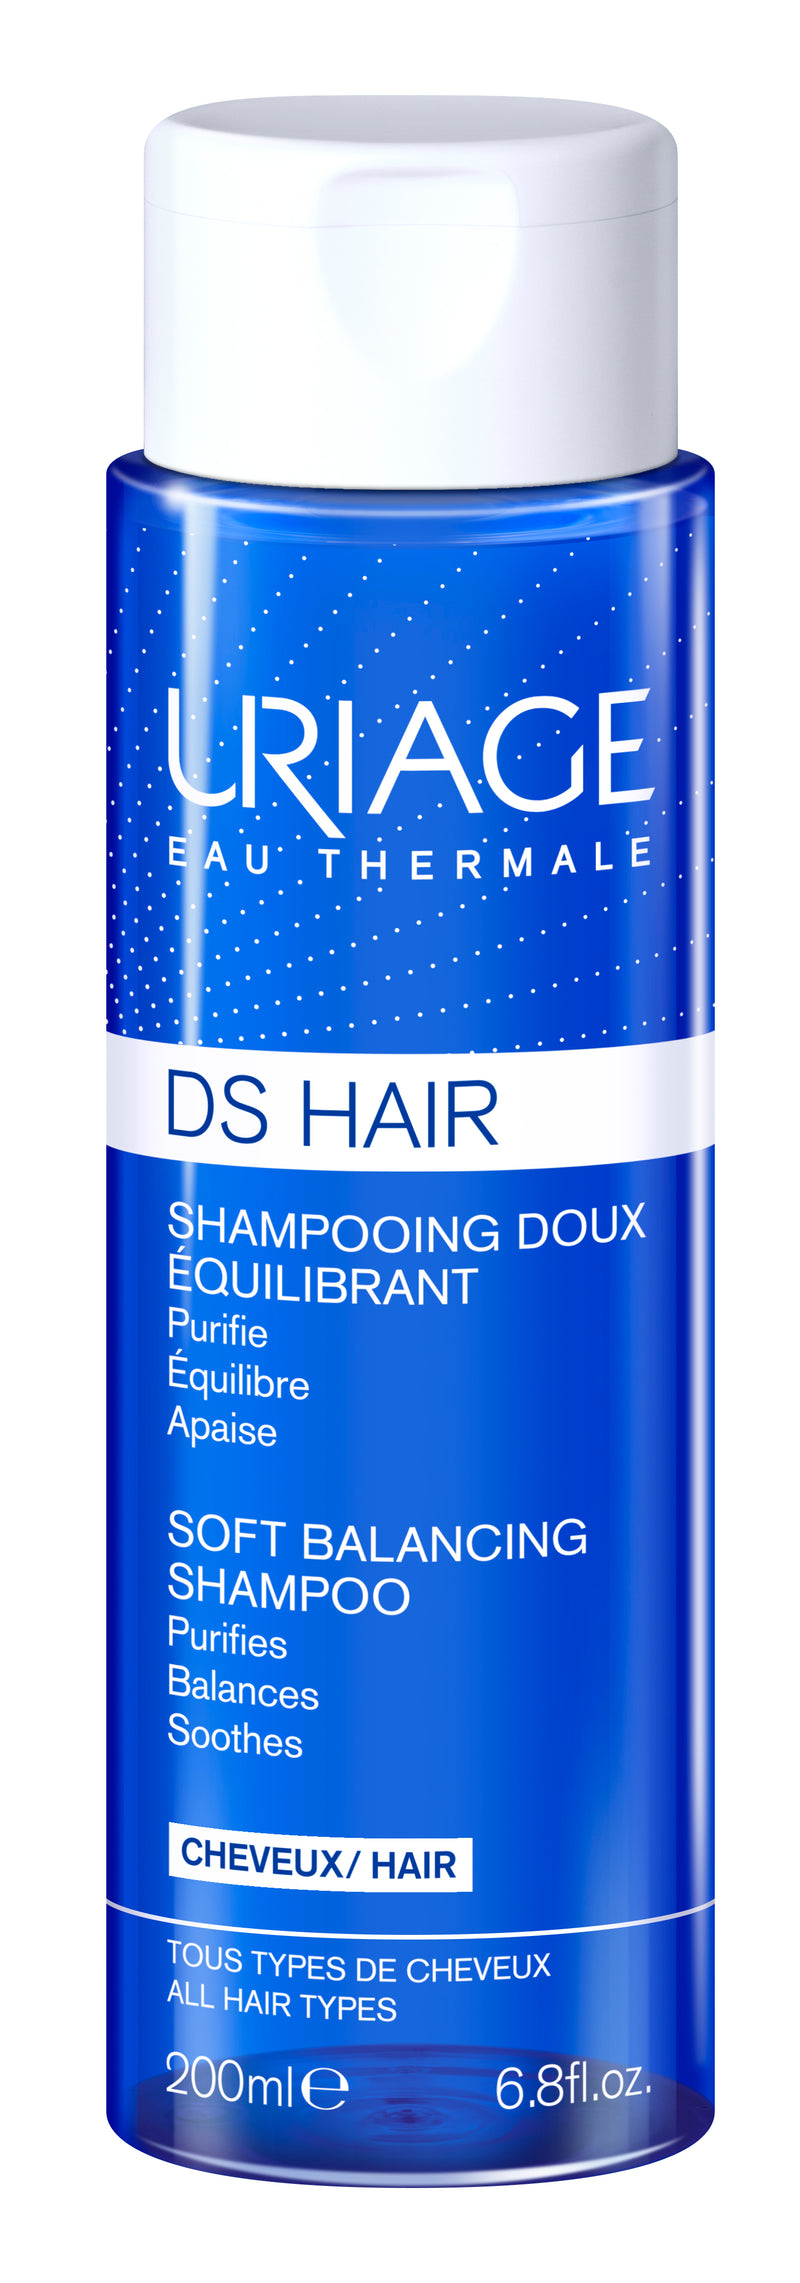 URIAGE DS HAIR - Soft Balancing Shampoo